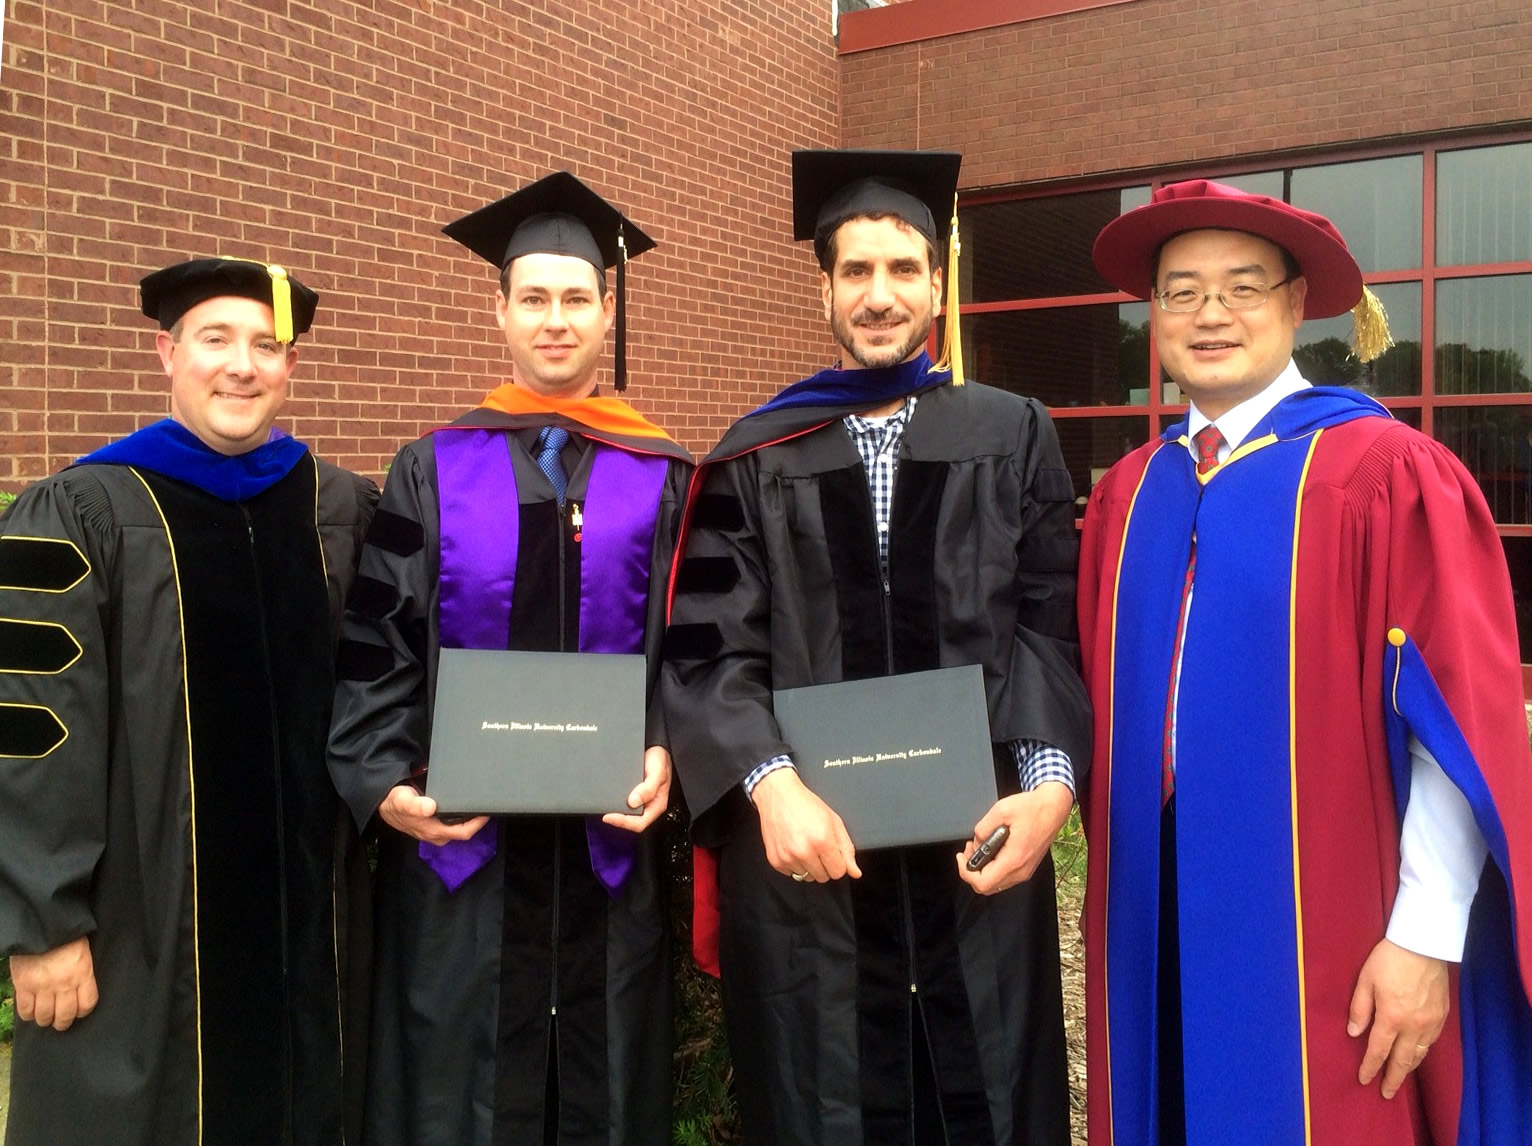 Ph D students Michael Williamson and Isam Al-Yaseri